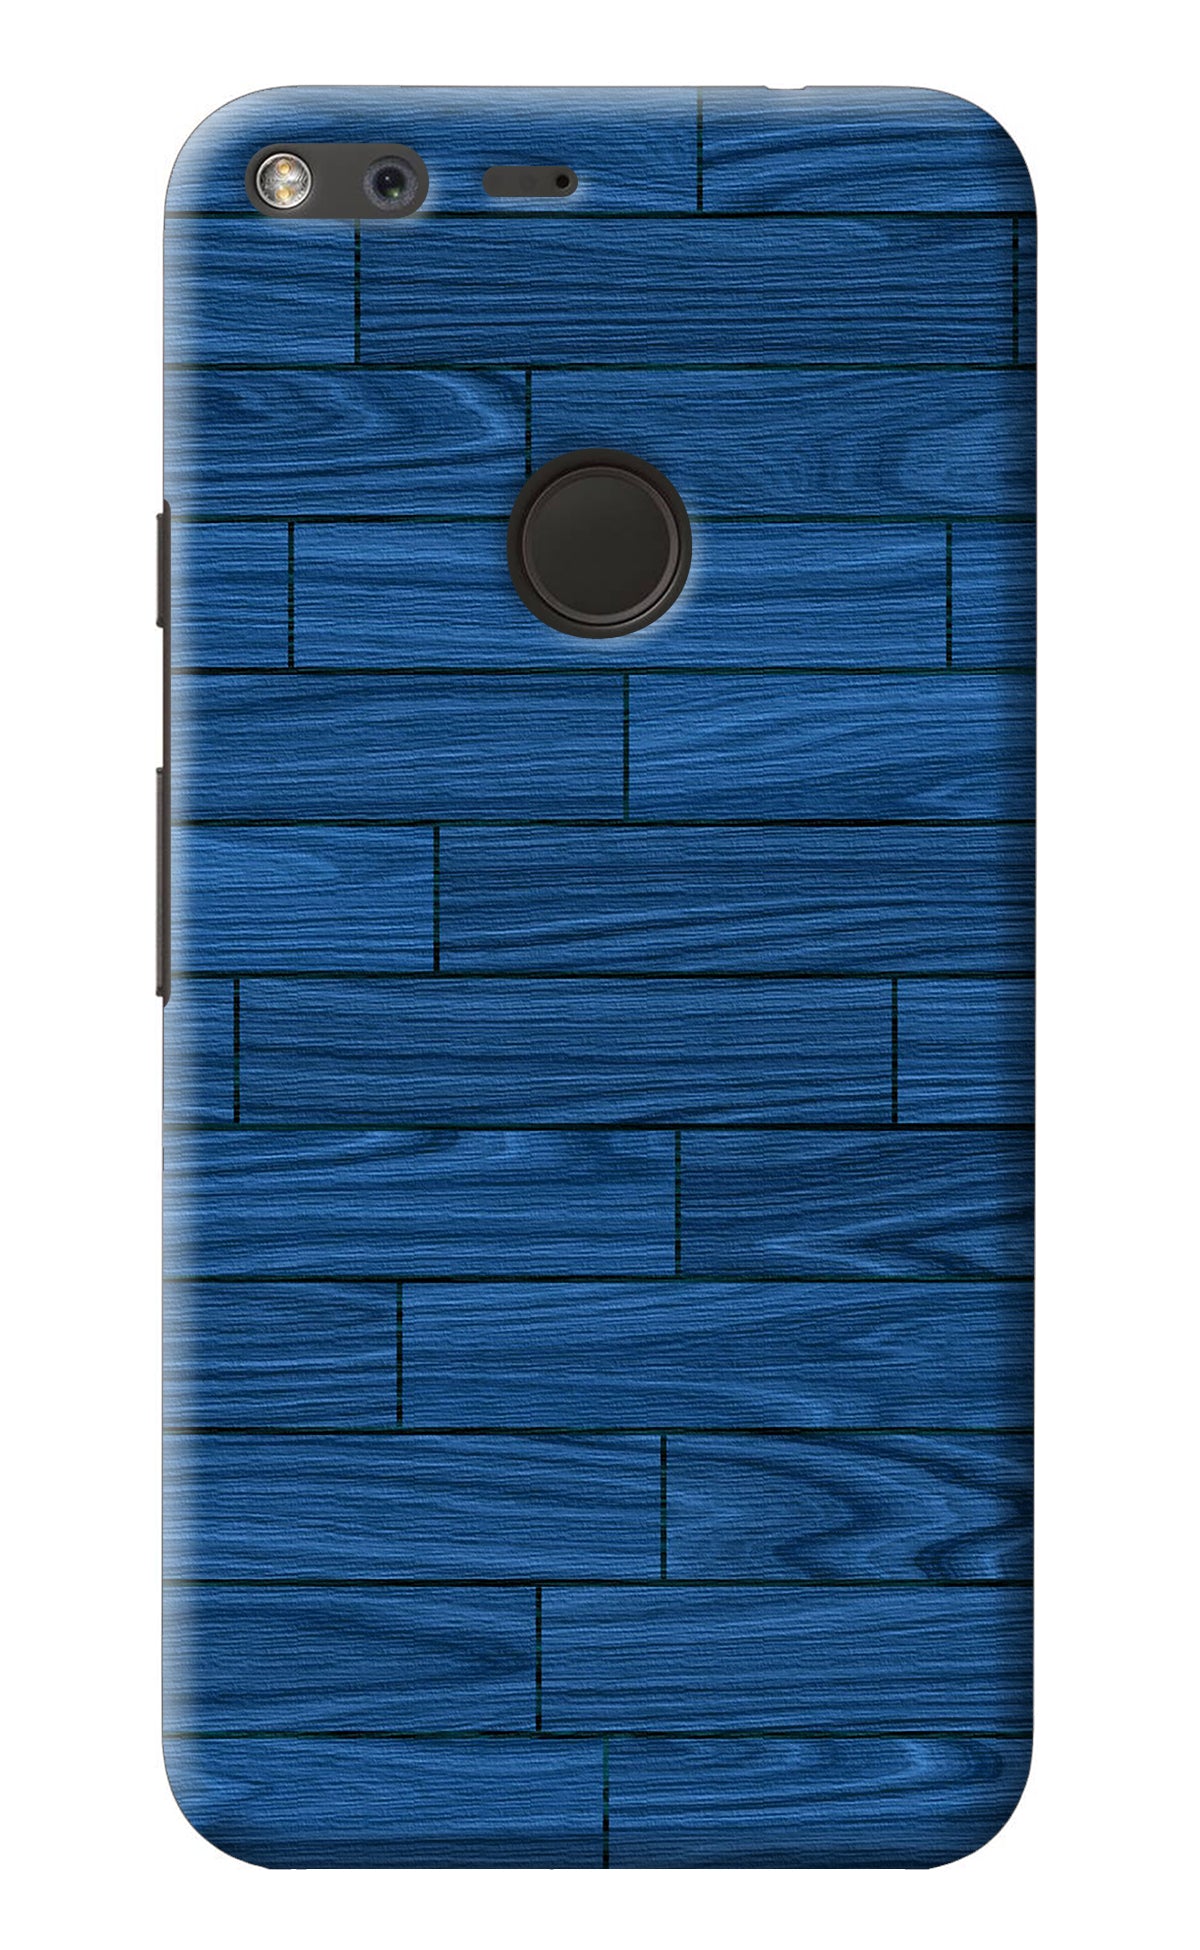 Wooden Texture Google Pixel XL Back Cover